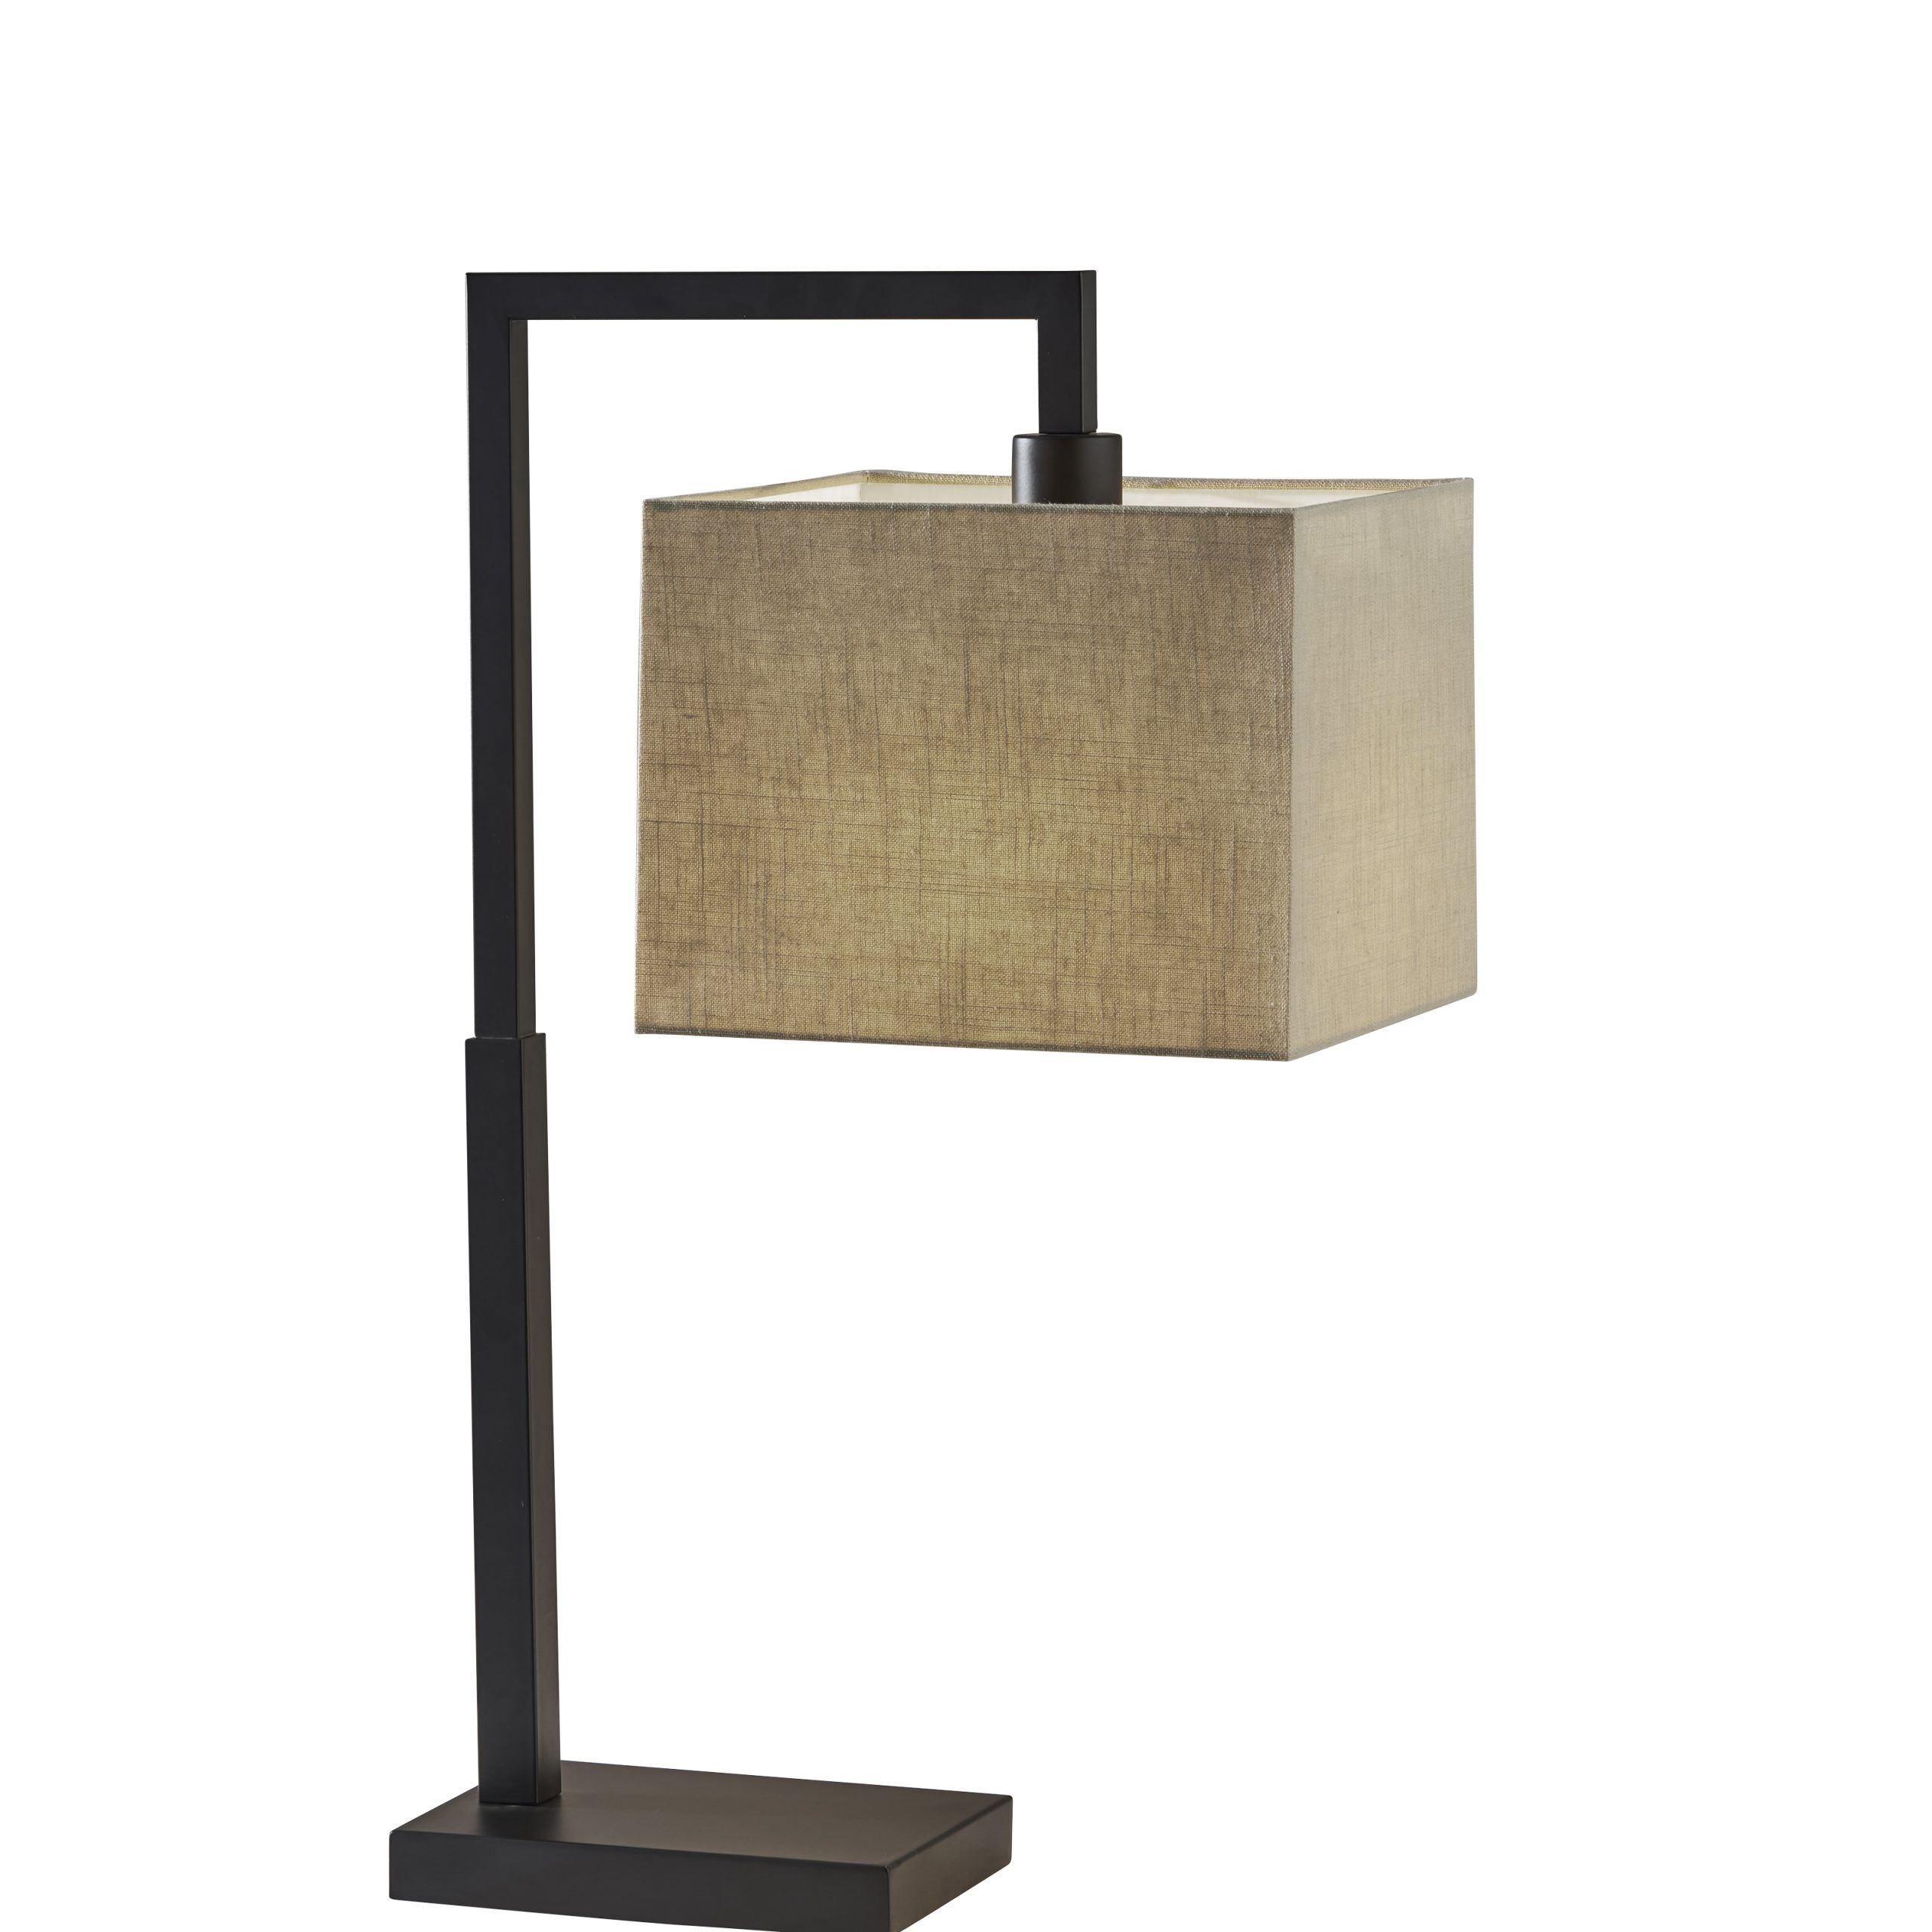 Adesso Richard Floor Lamp, Black, Beige Textured Fabric Shade – Walmart With Textured Fabric Floor Lamps (View 4 of 20)